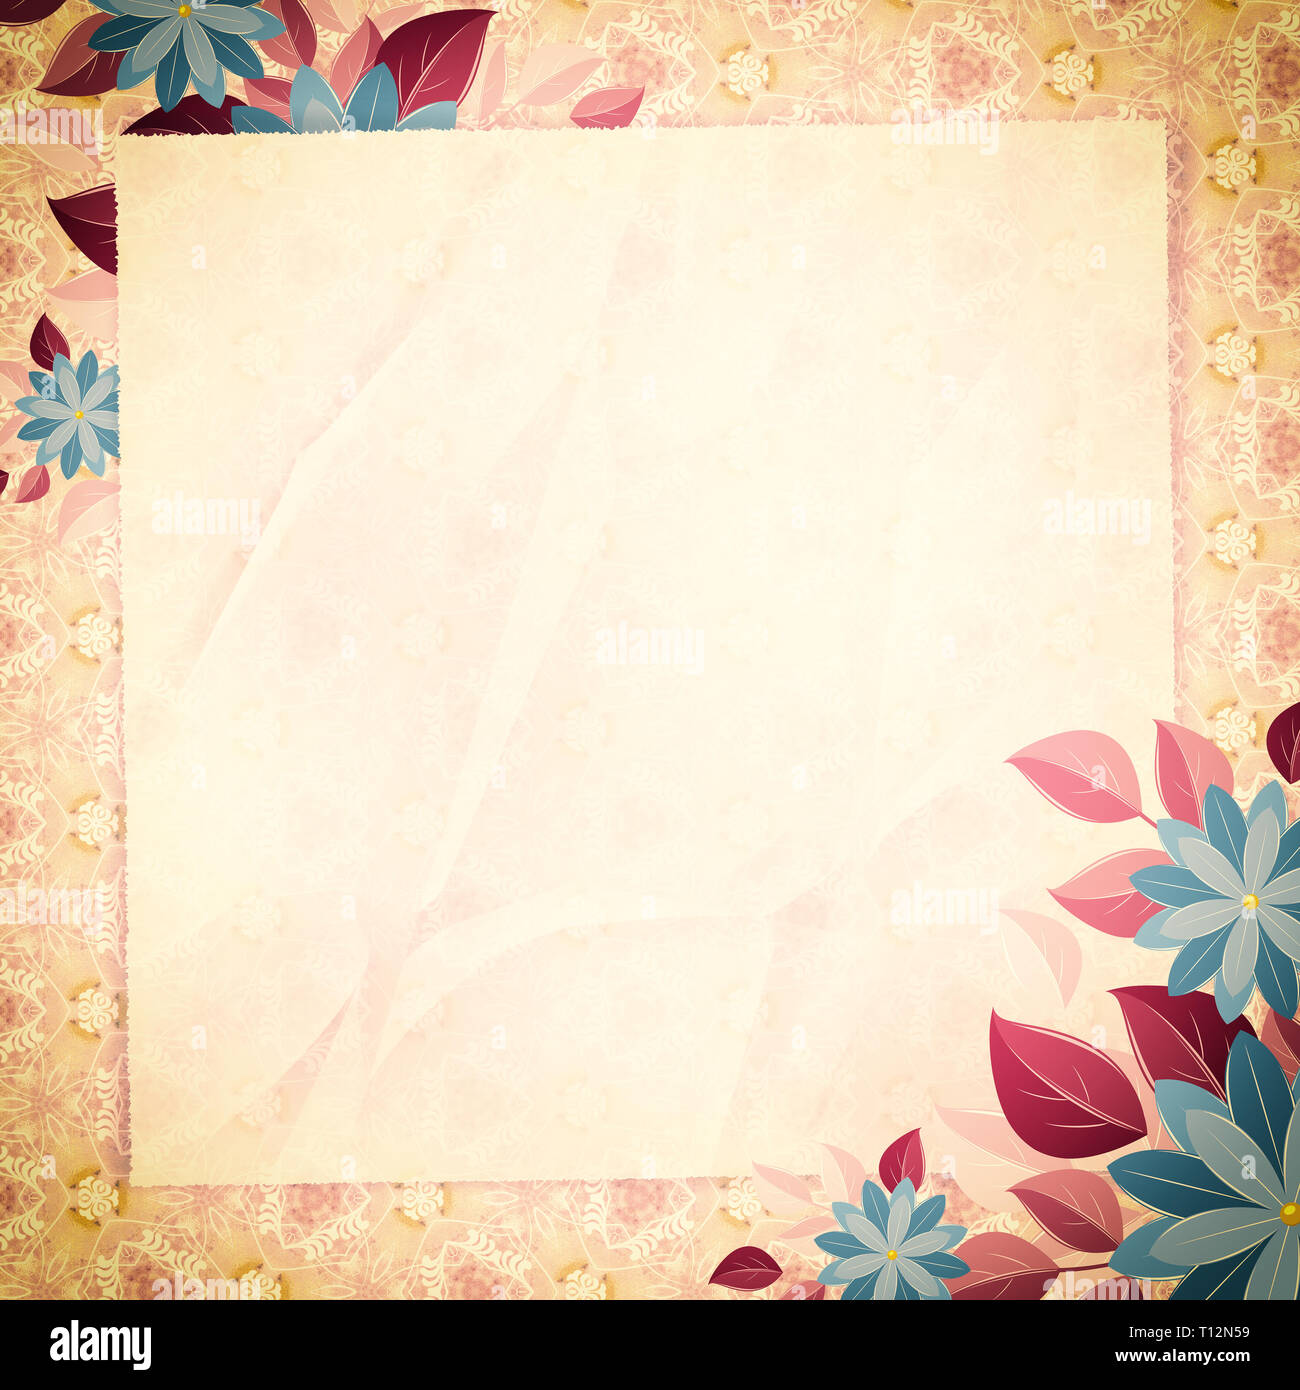 Vintage floral paper background Stock Photo